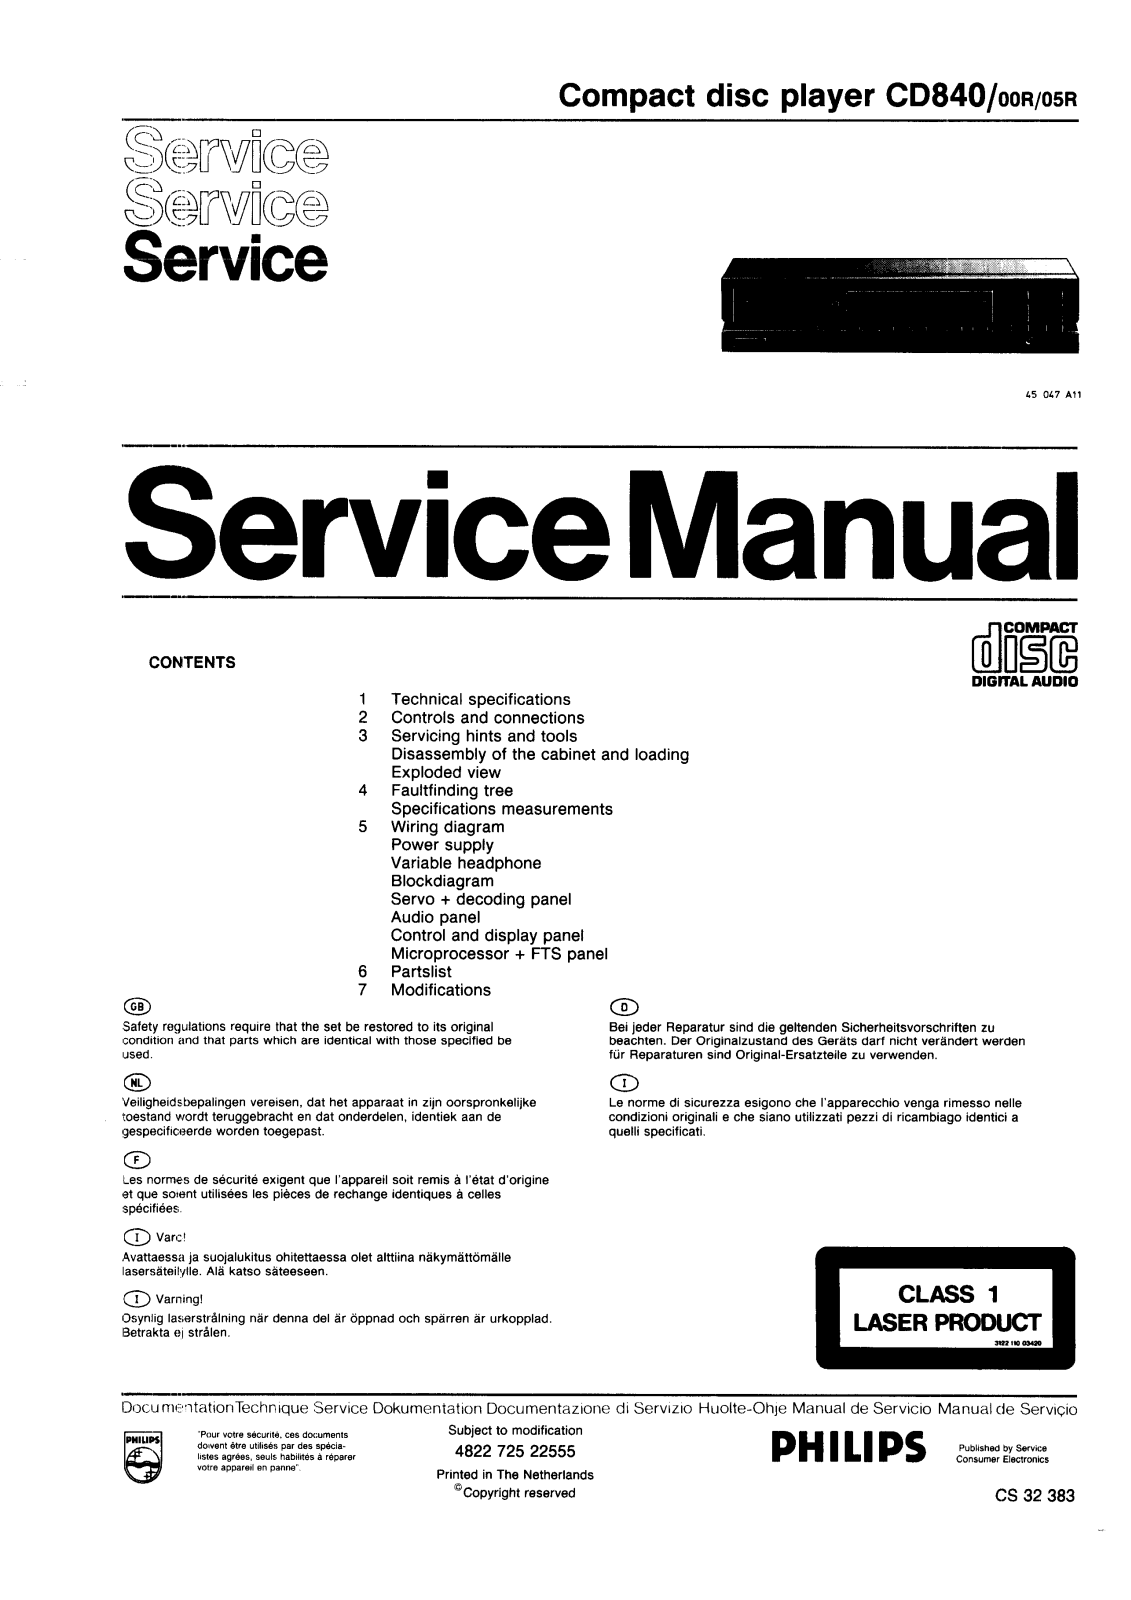 Philips CD-840 Service manual